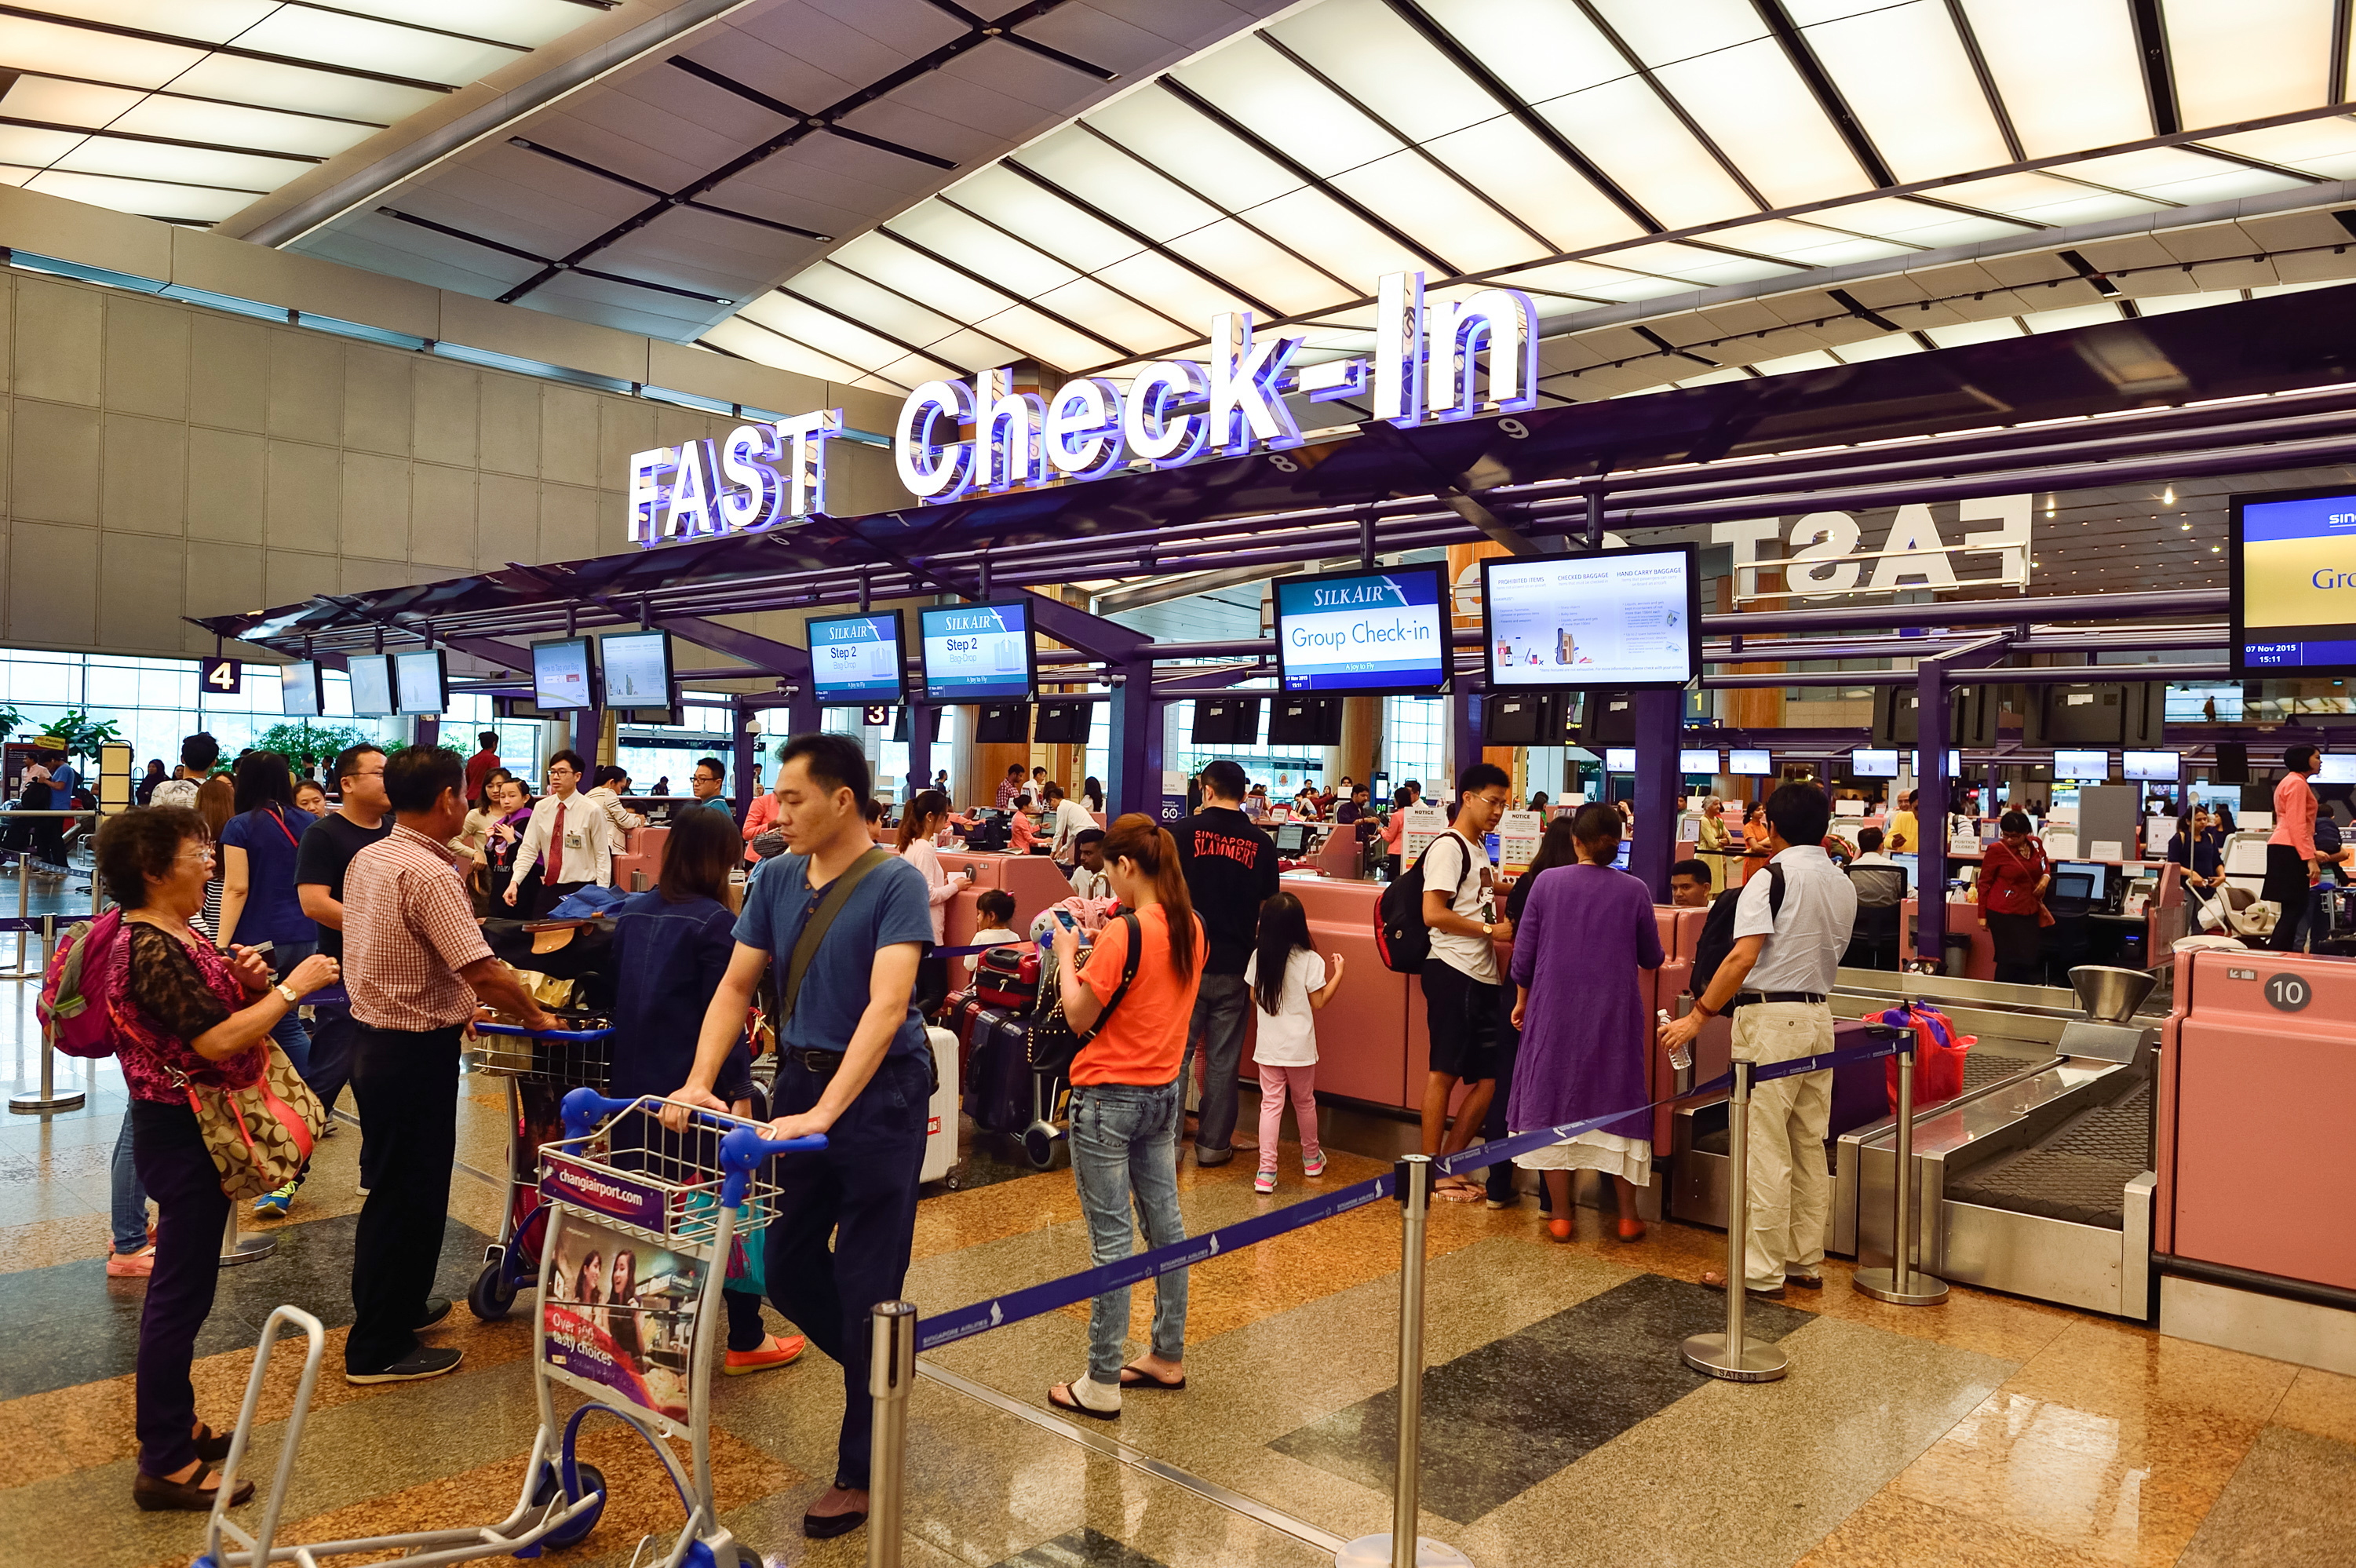 SilkAir check-in zone at Changi Airport, Singapore, November 7, 2015.